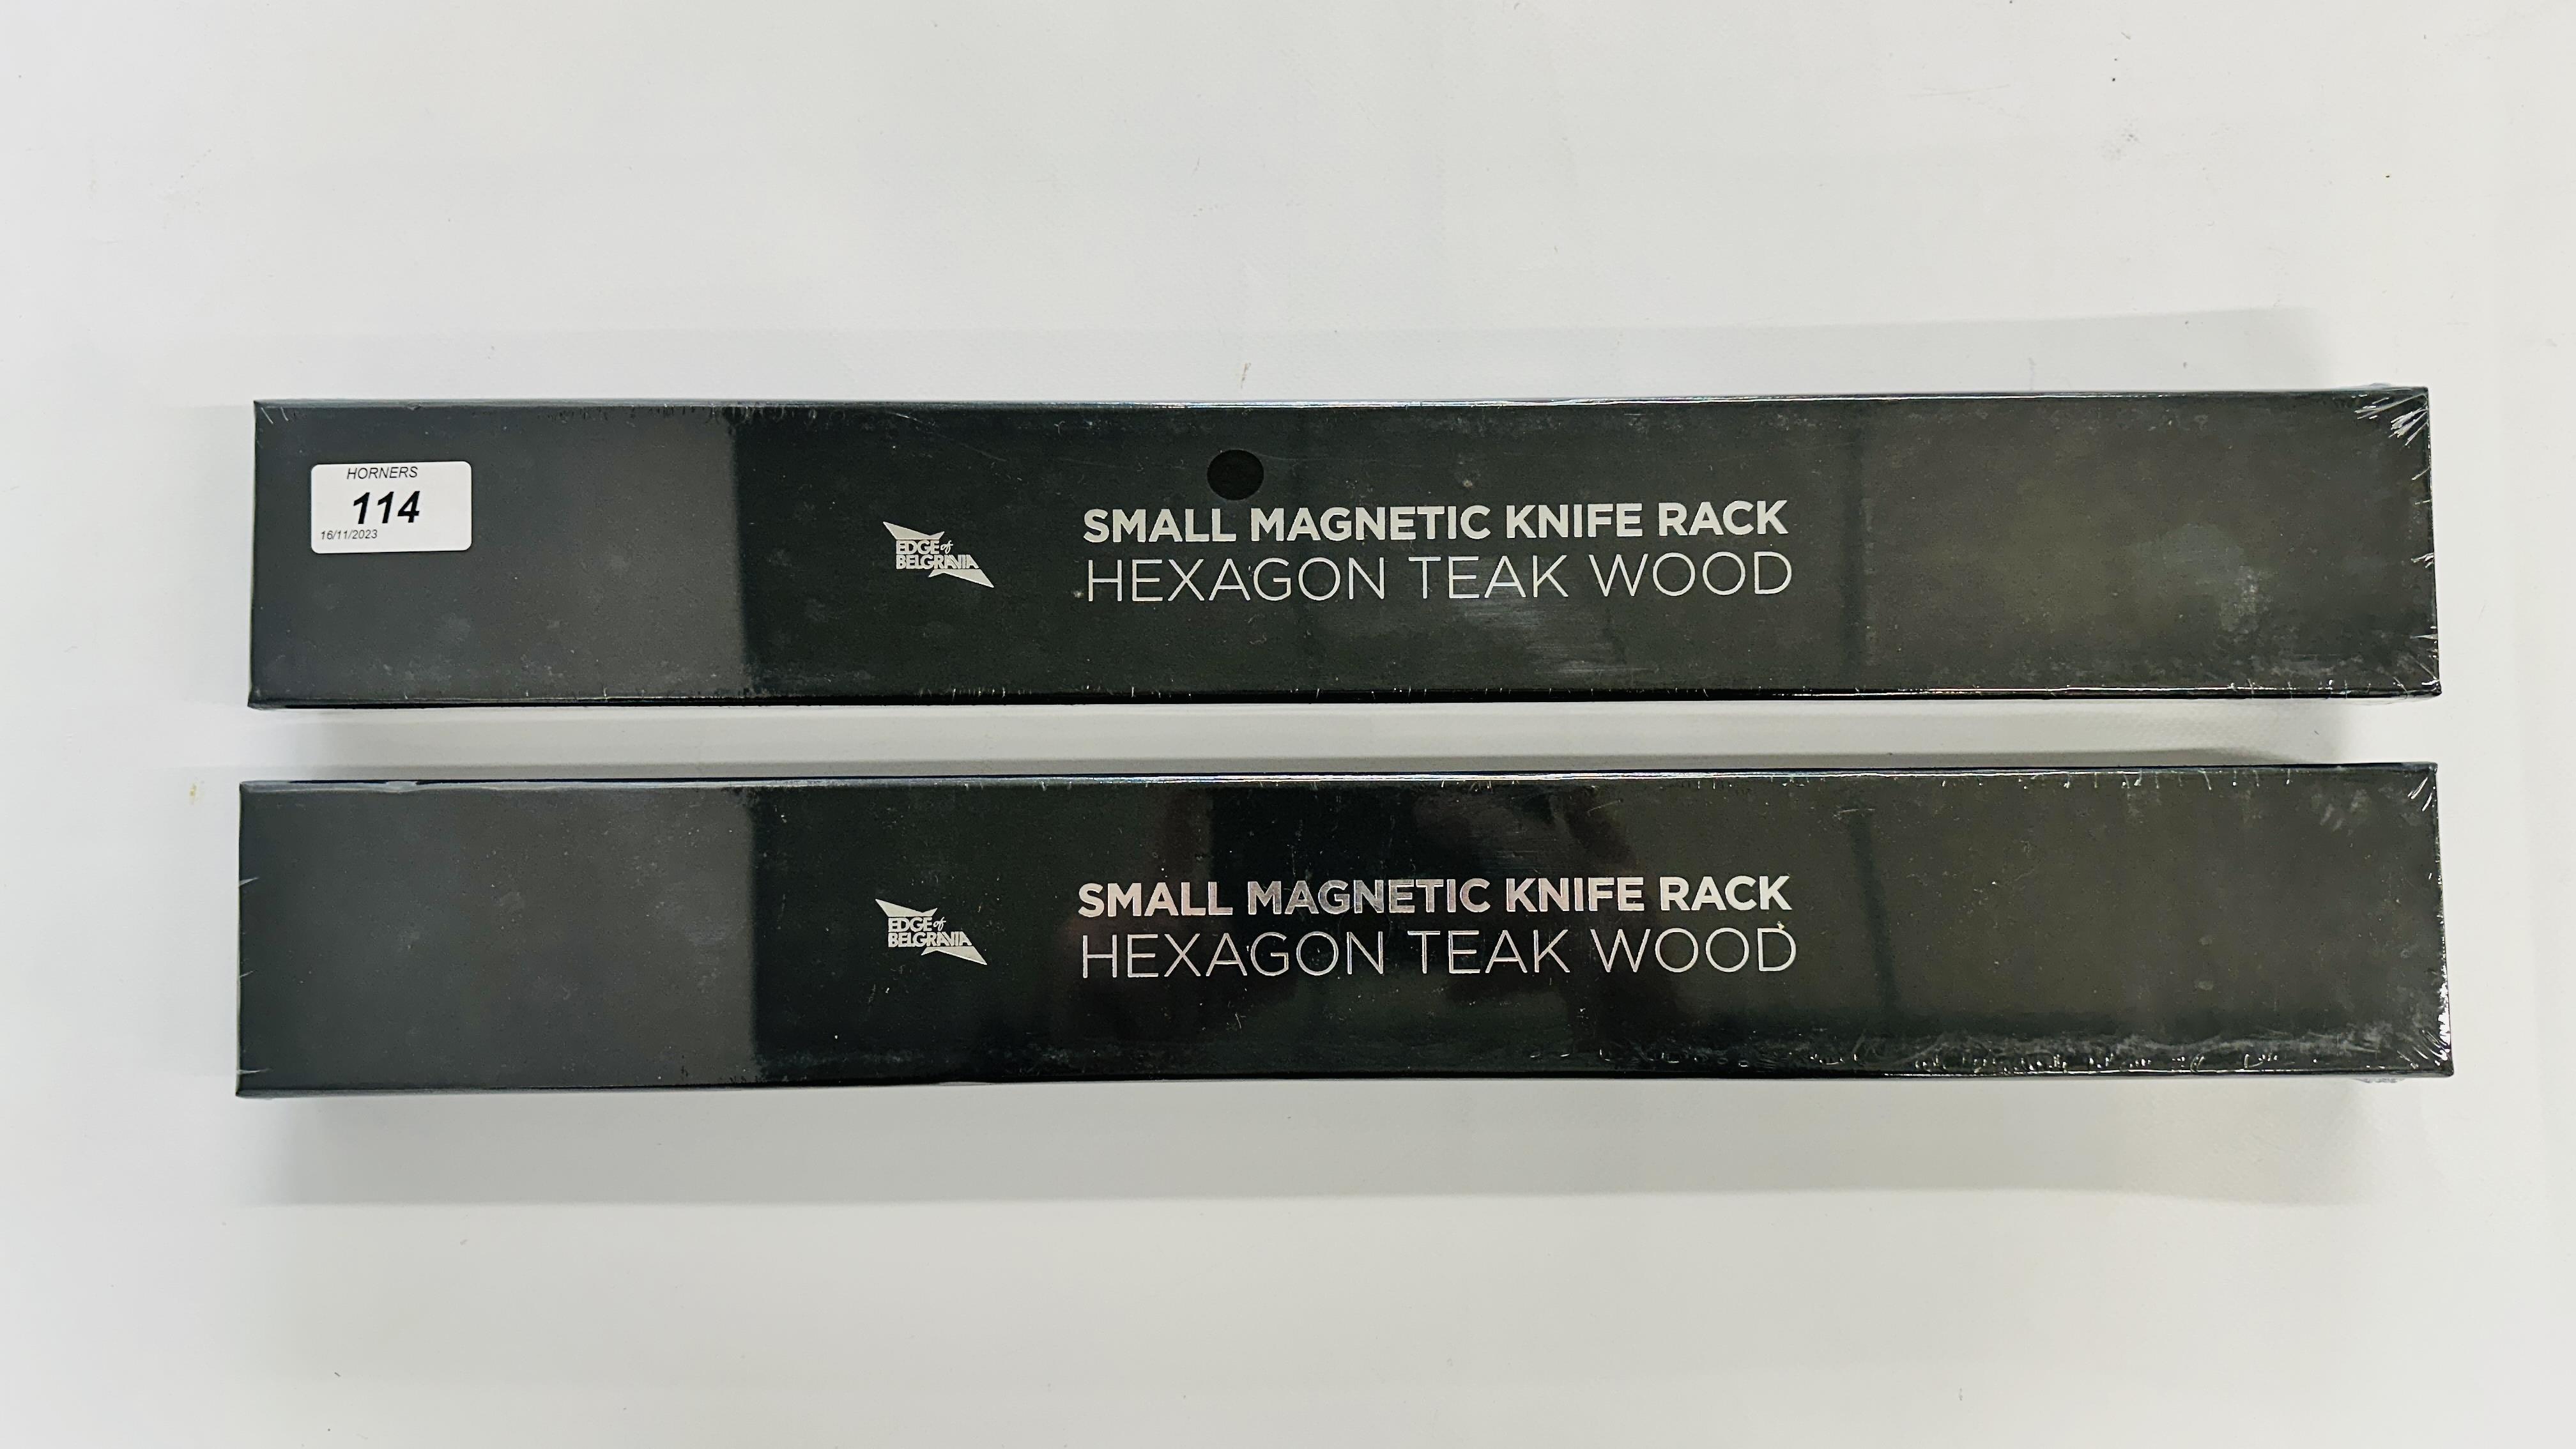 2 X AS NEW BOXED EDGE OF BELGRAVIA SMALL MAGNETIC KNIFE RACK HEXAGON TEAK WOOD.